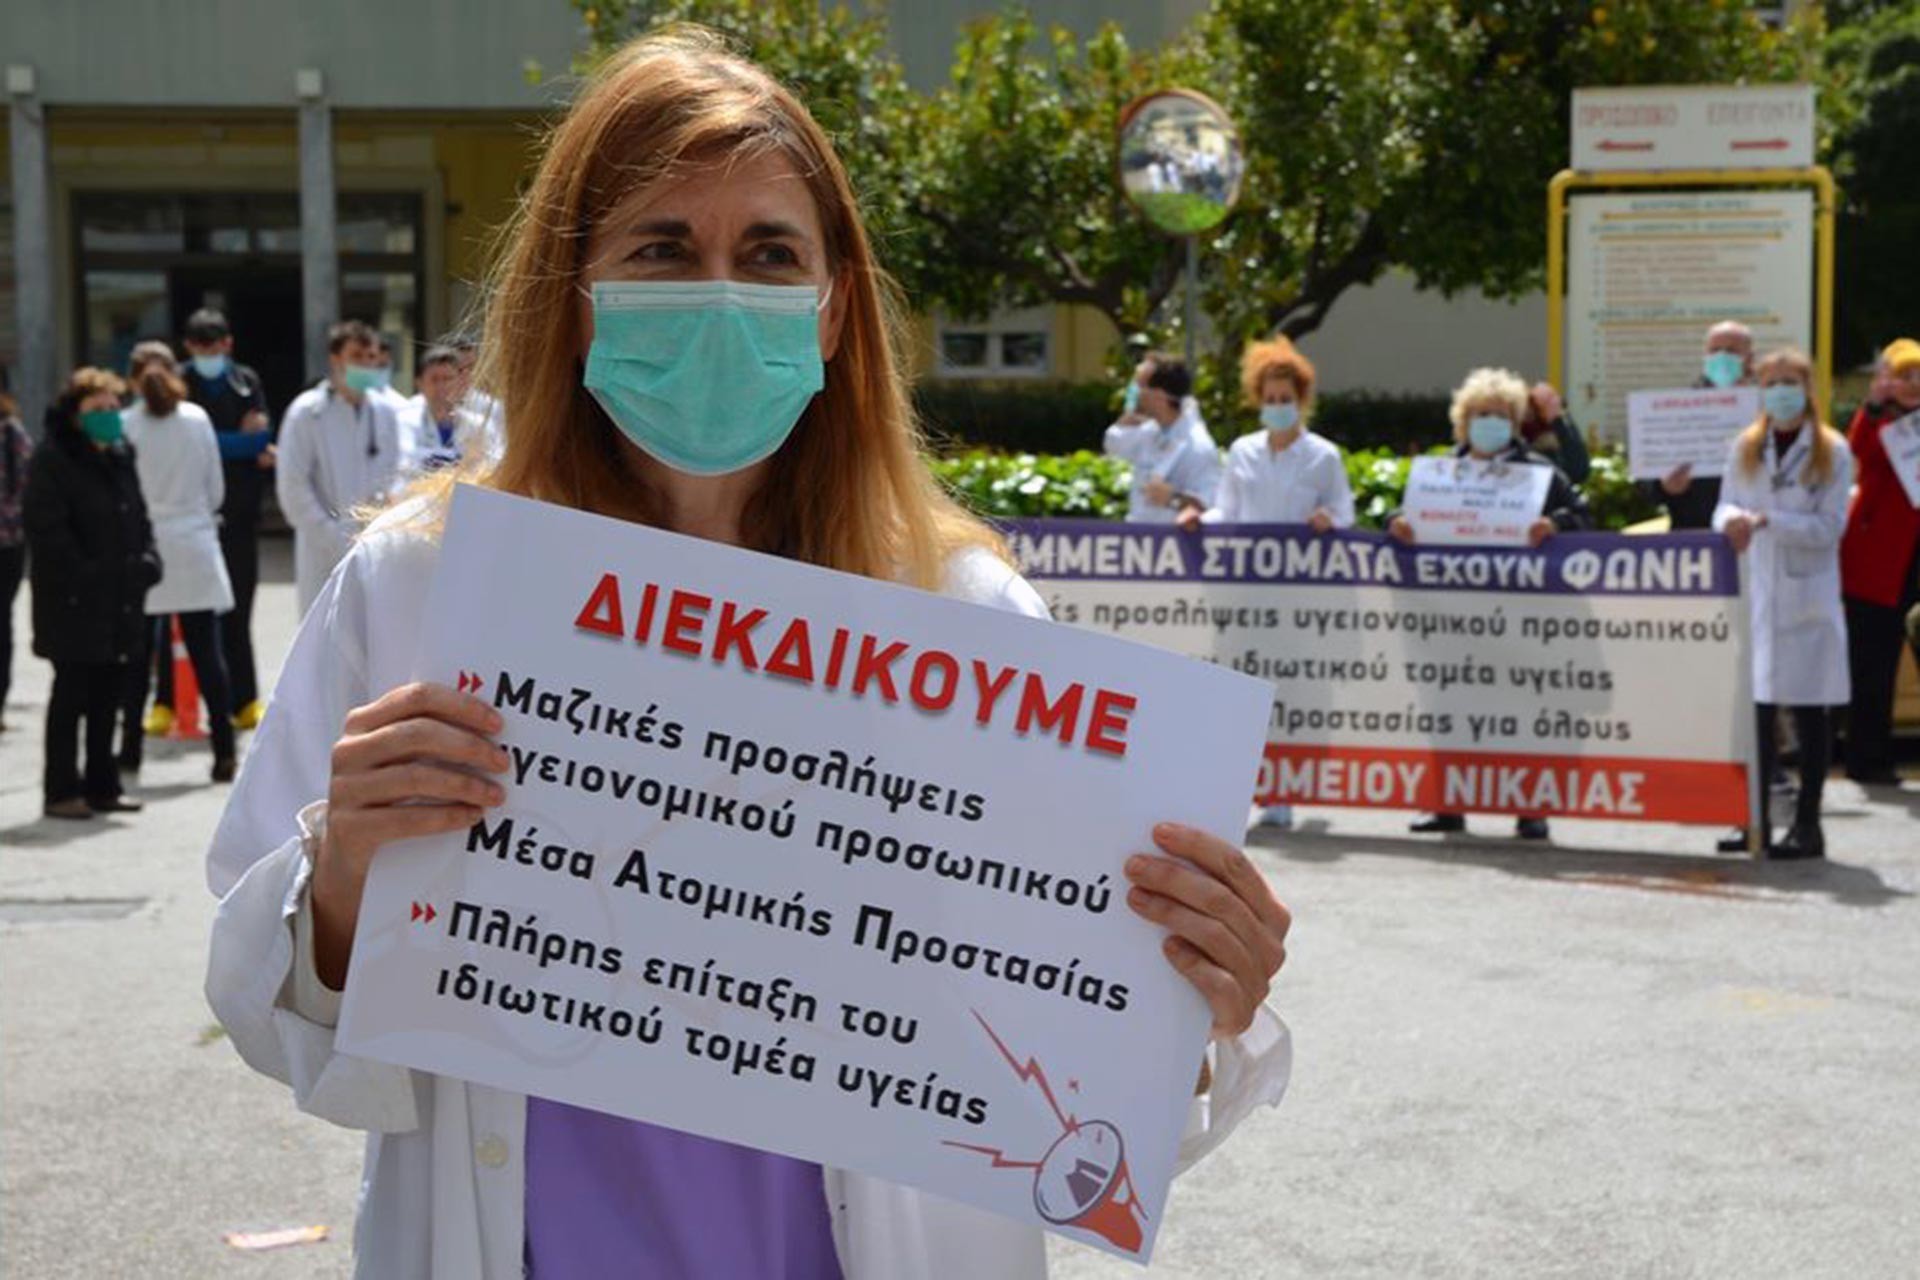 Doctors in Greece